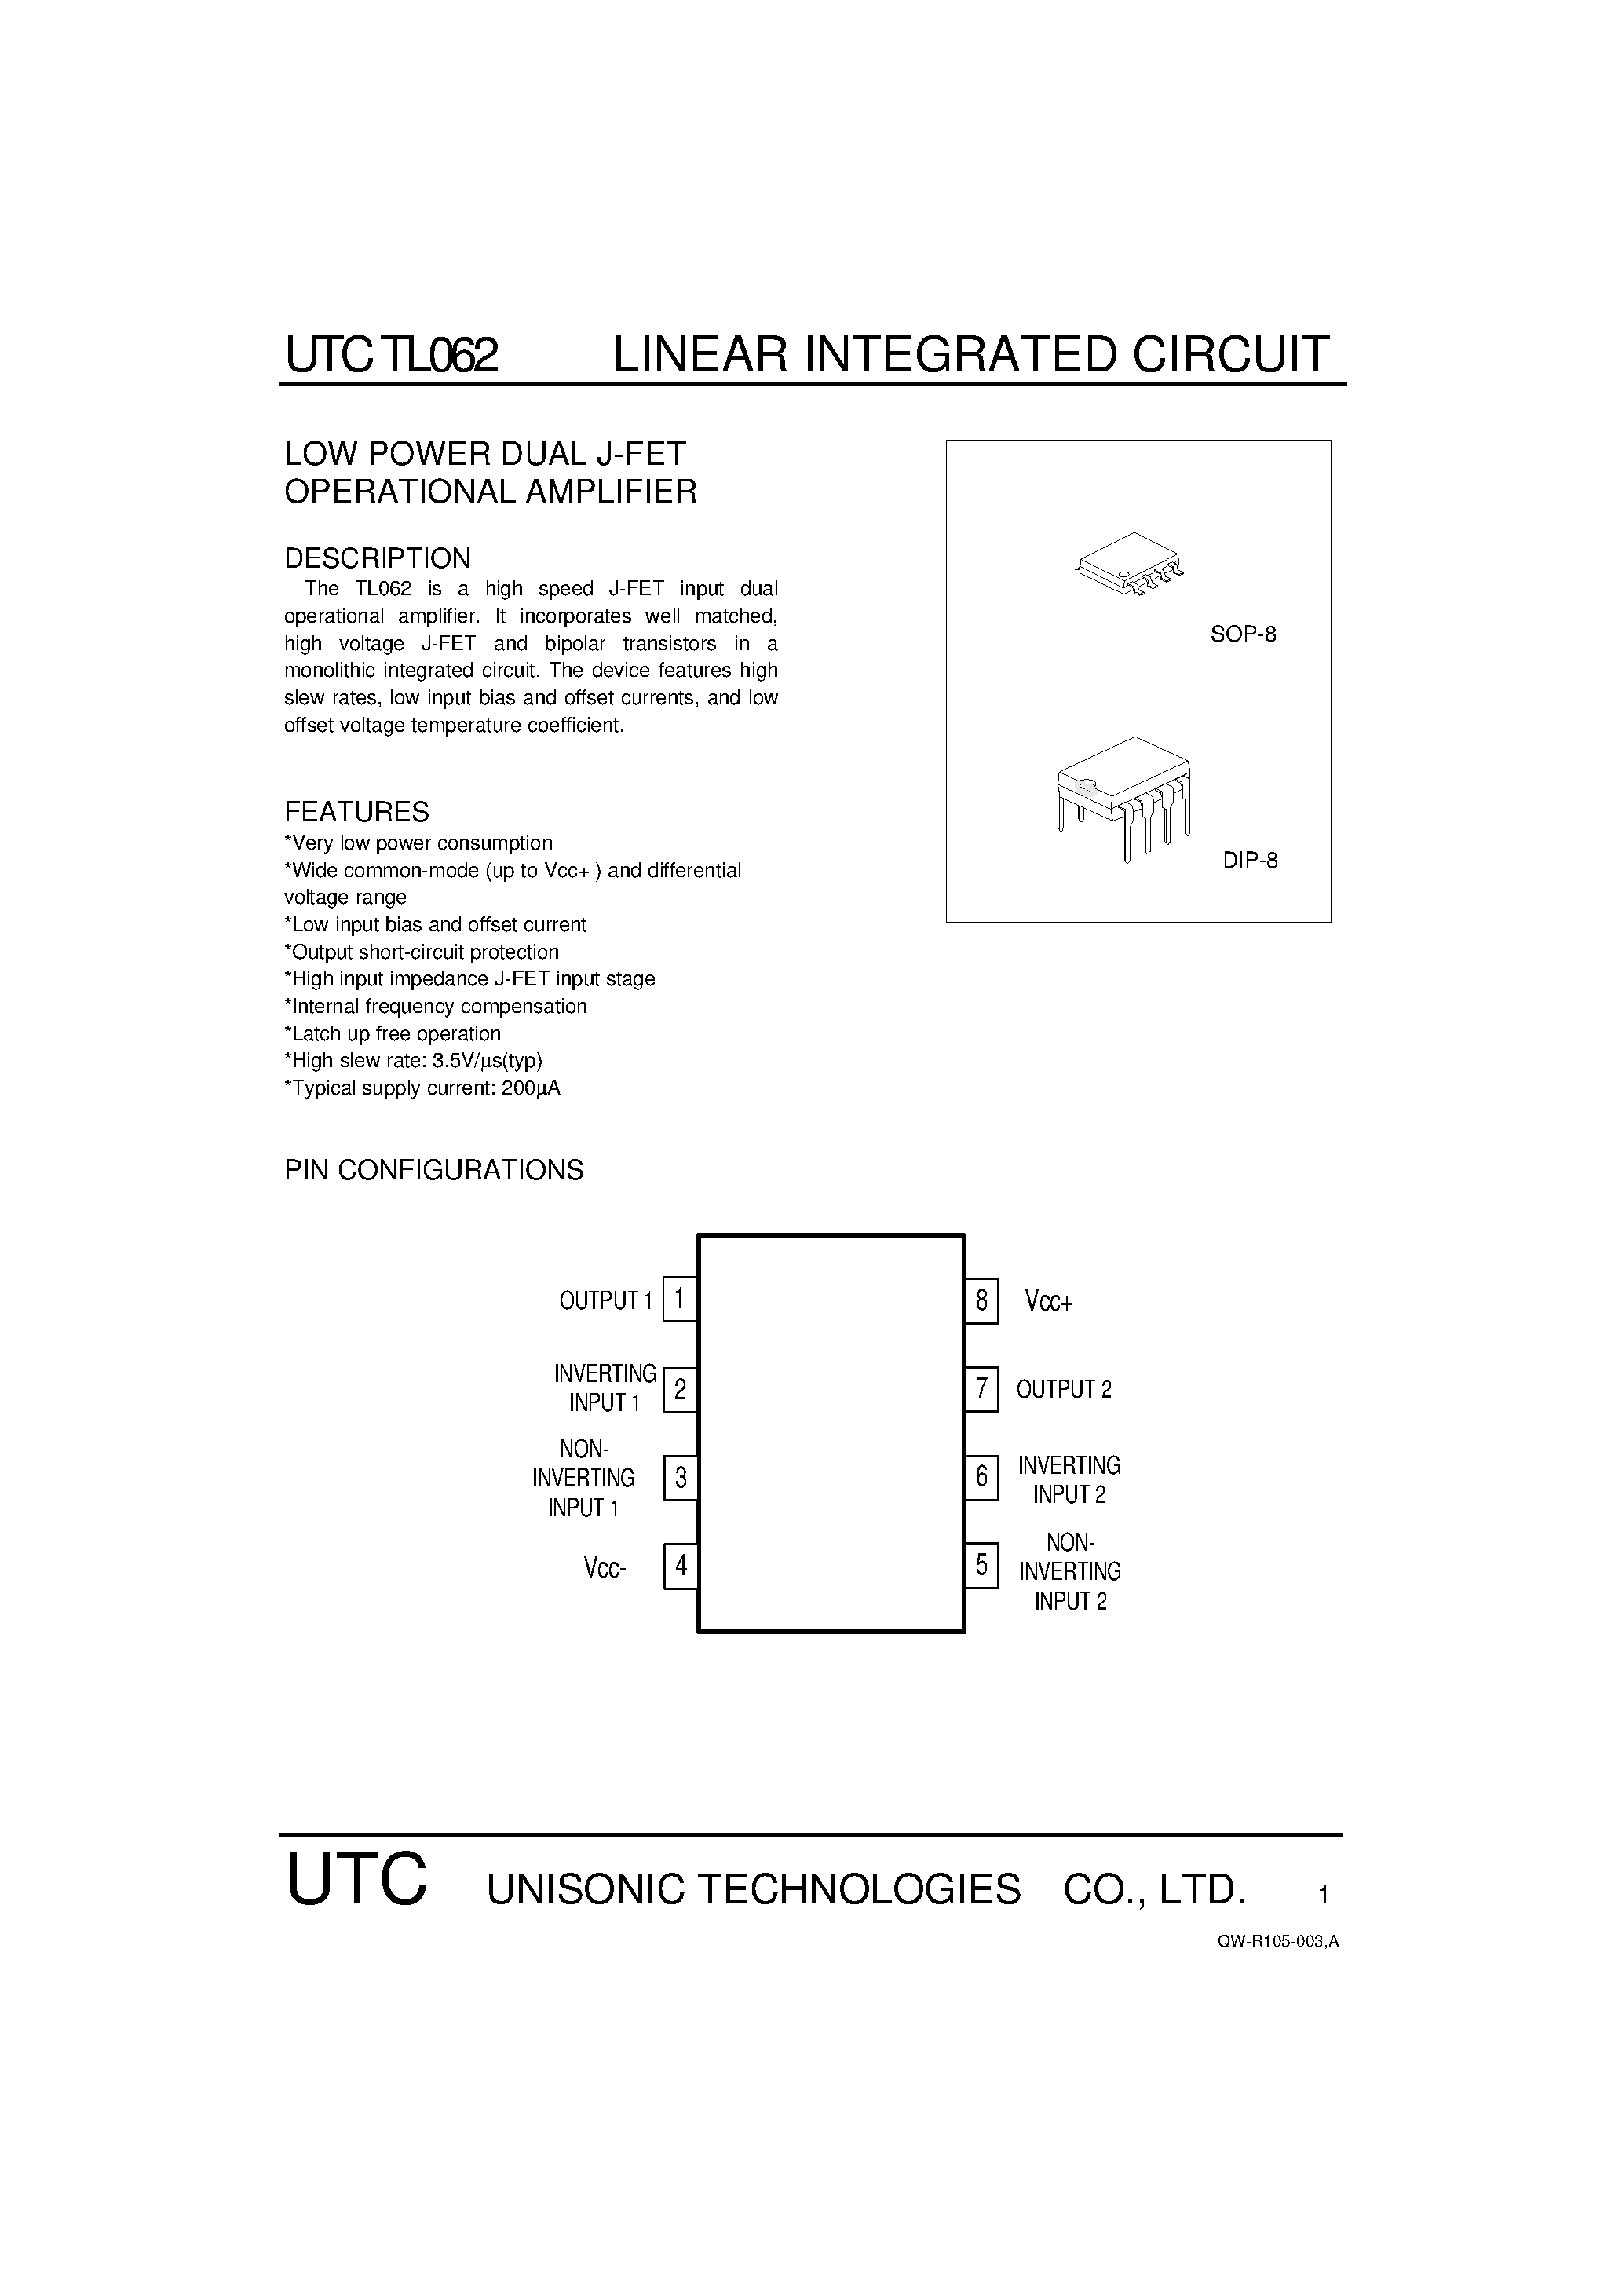 Datasheet UTCTL062 - LOW POWER DUAL J-FET OPERATIONAL AMPLIFIER page 1